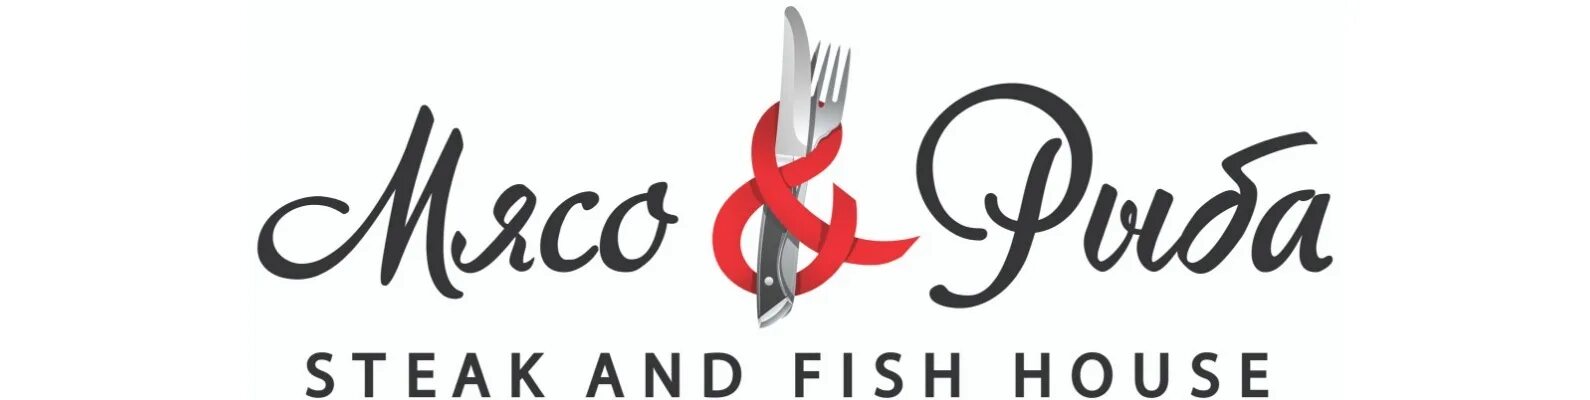 Мясо рыба краснодар. Мясо рыба логотип. Мясо рыба ресторан логотип. Логотип кафе мясо и рыба. Мясо и рыба ресторан лого.